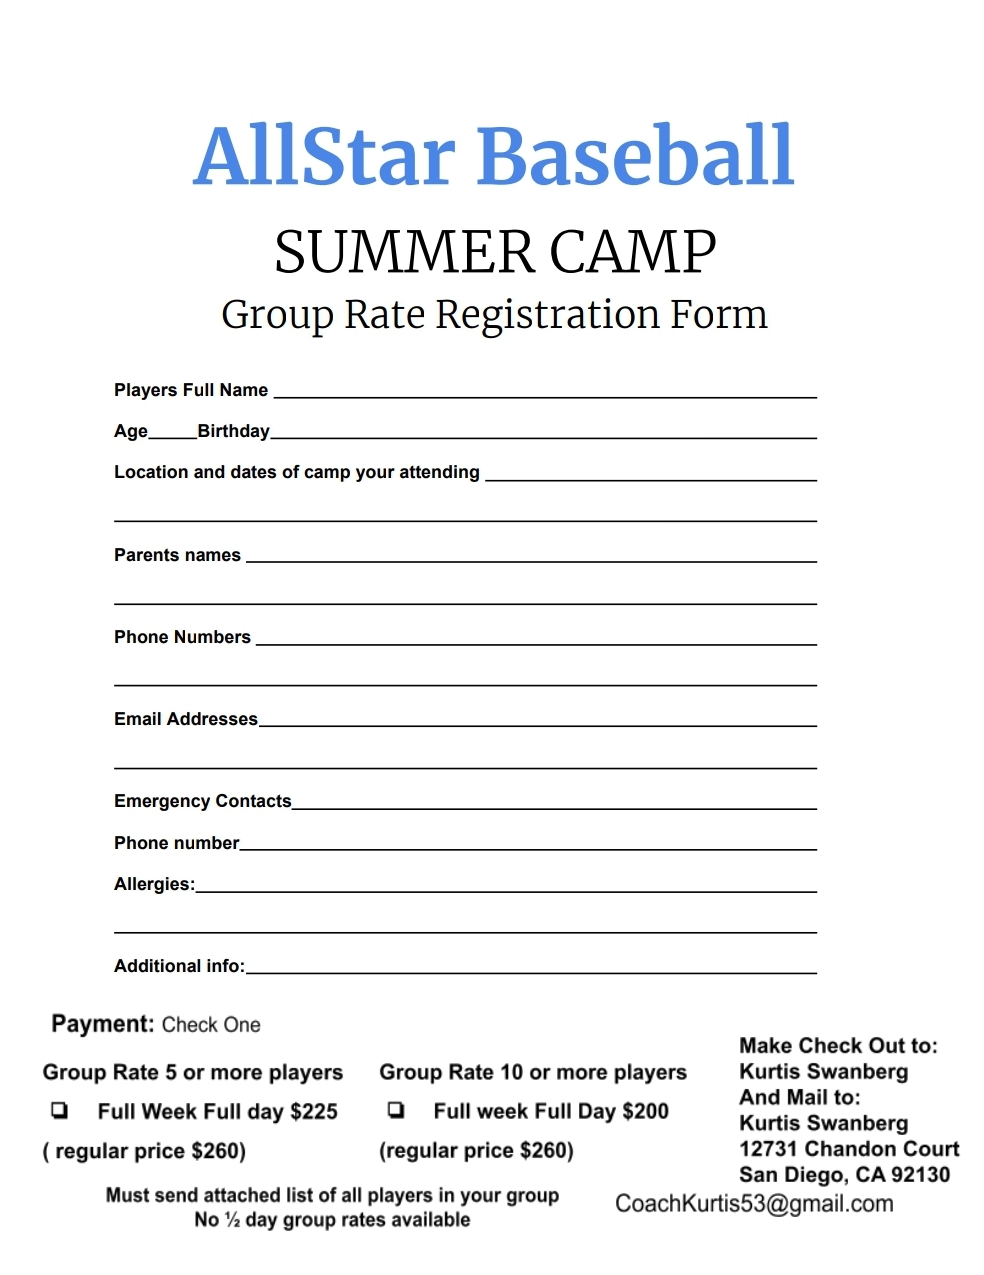 Summer Camp Group Form